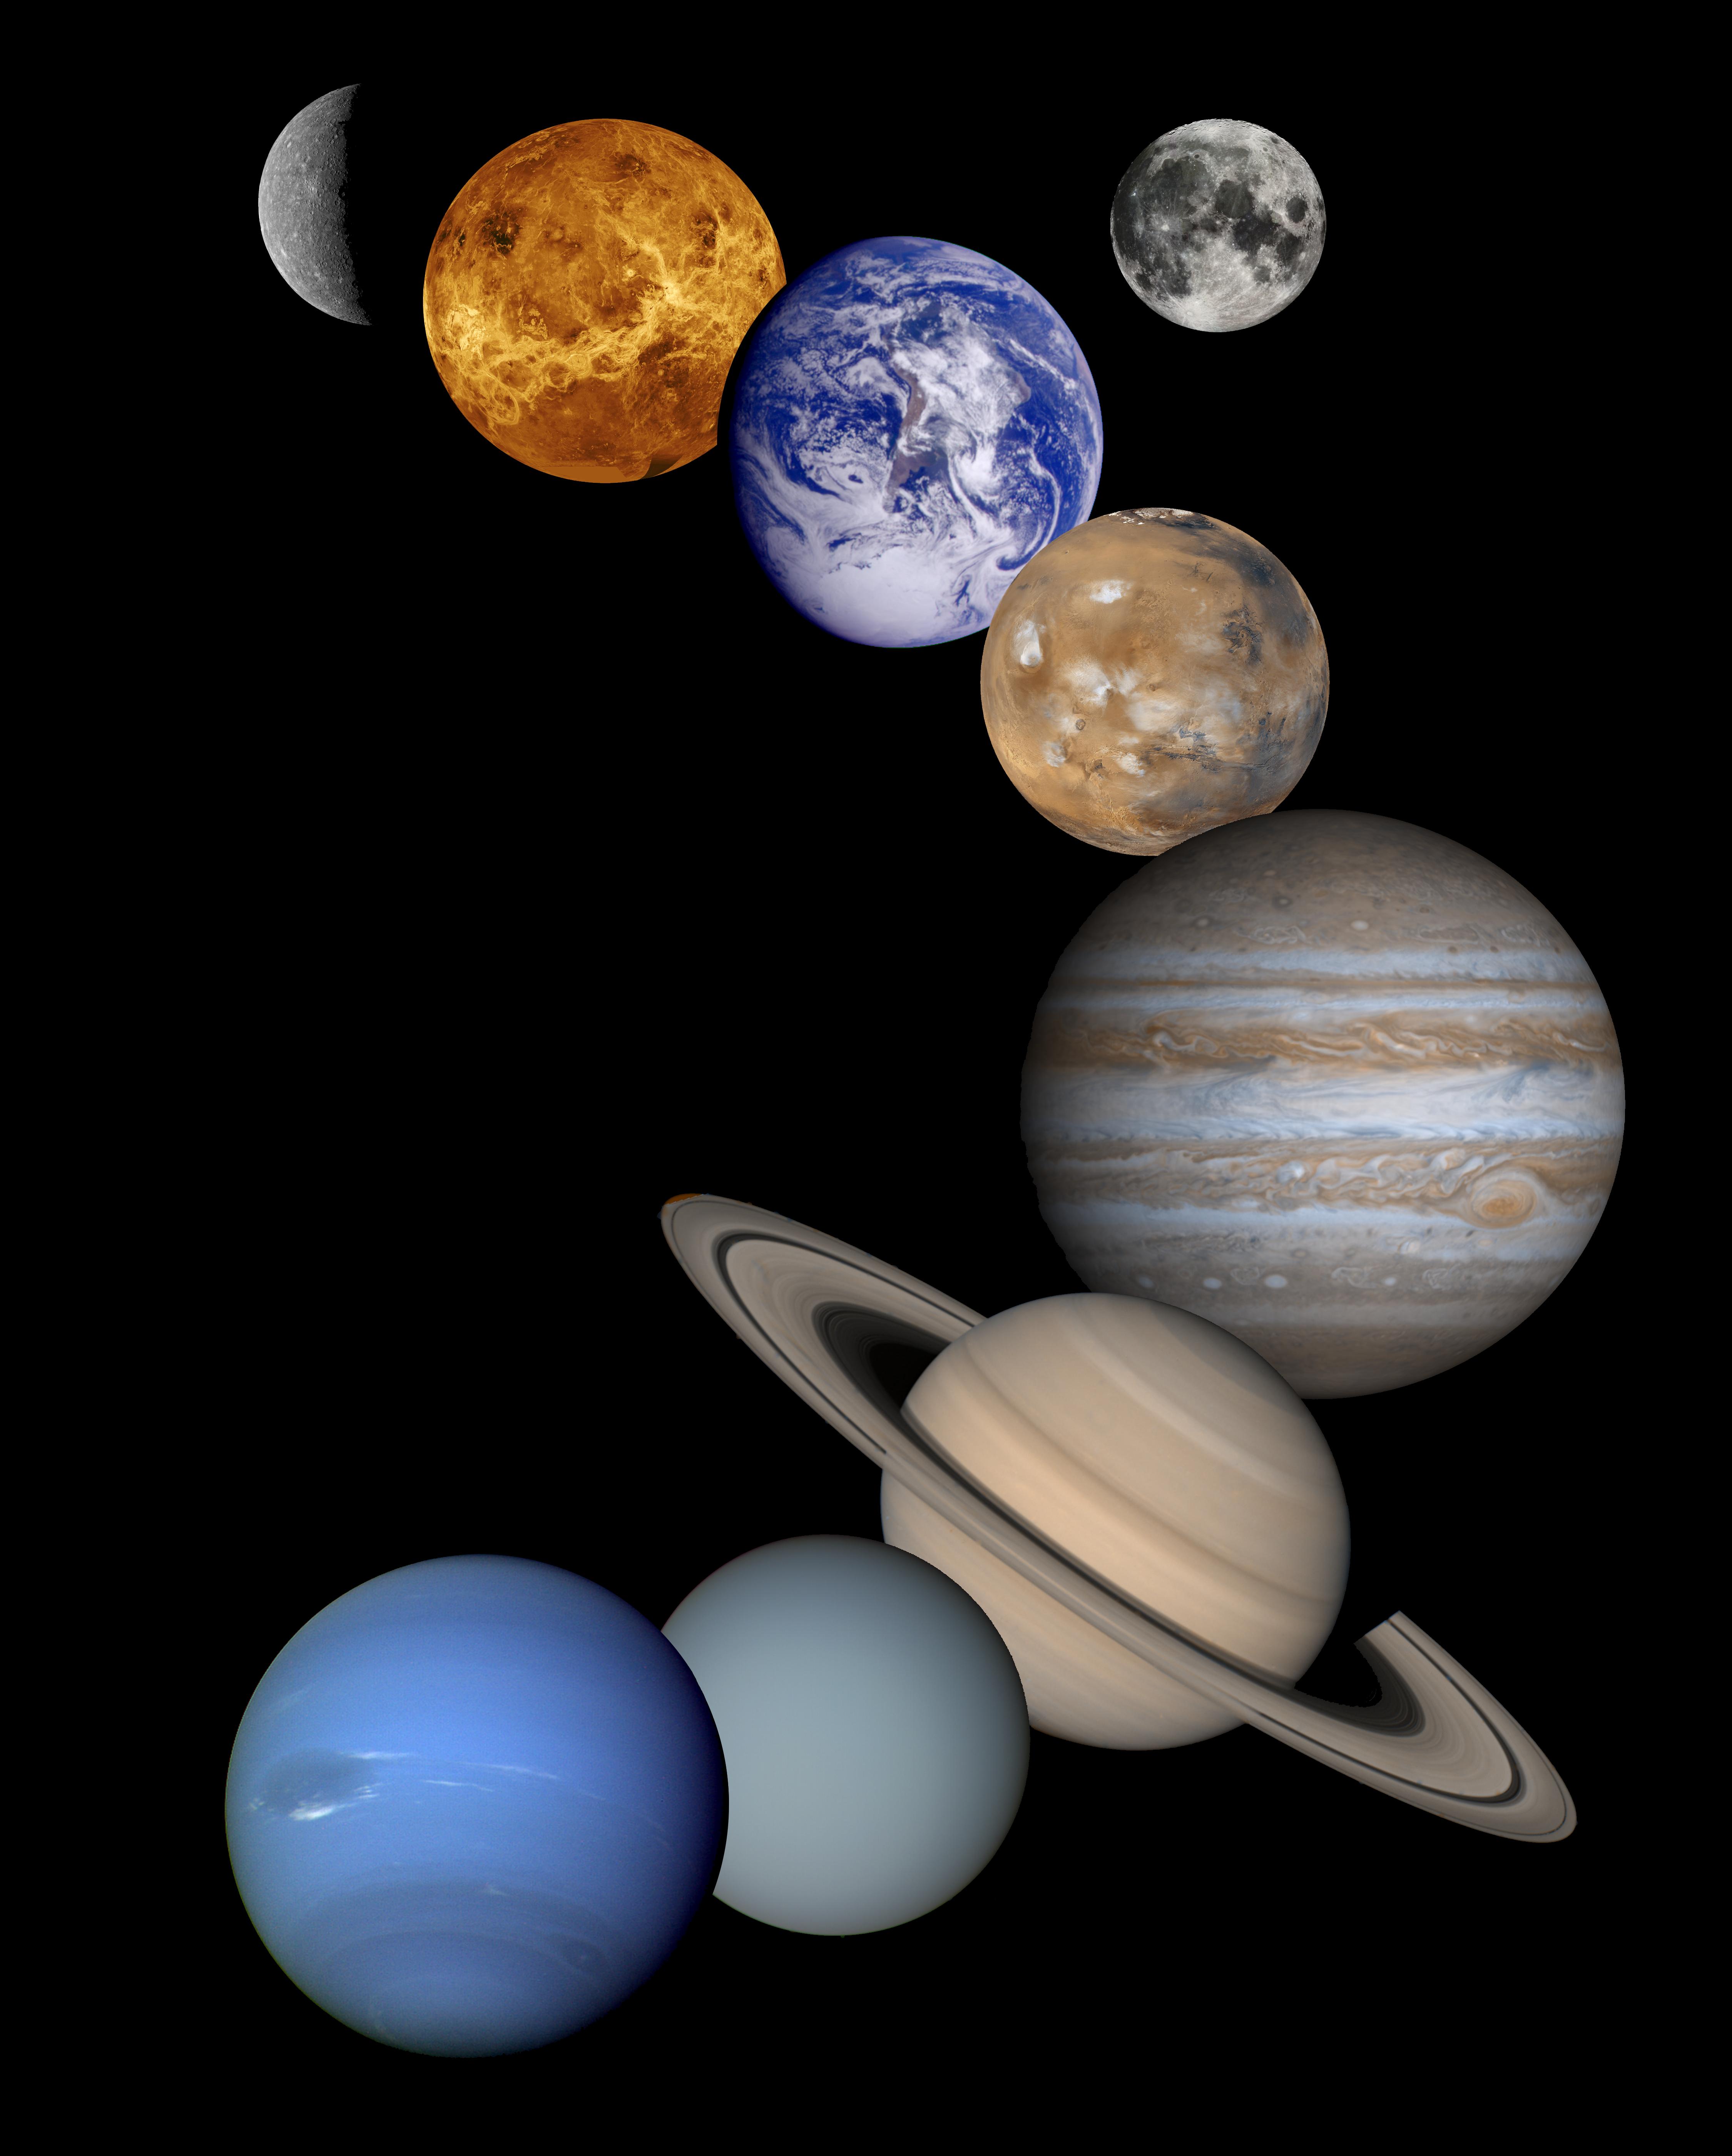 venus solar system